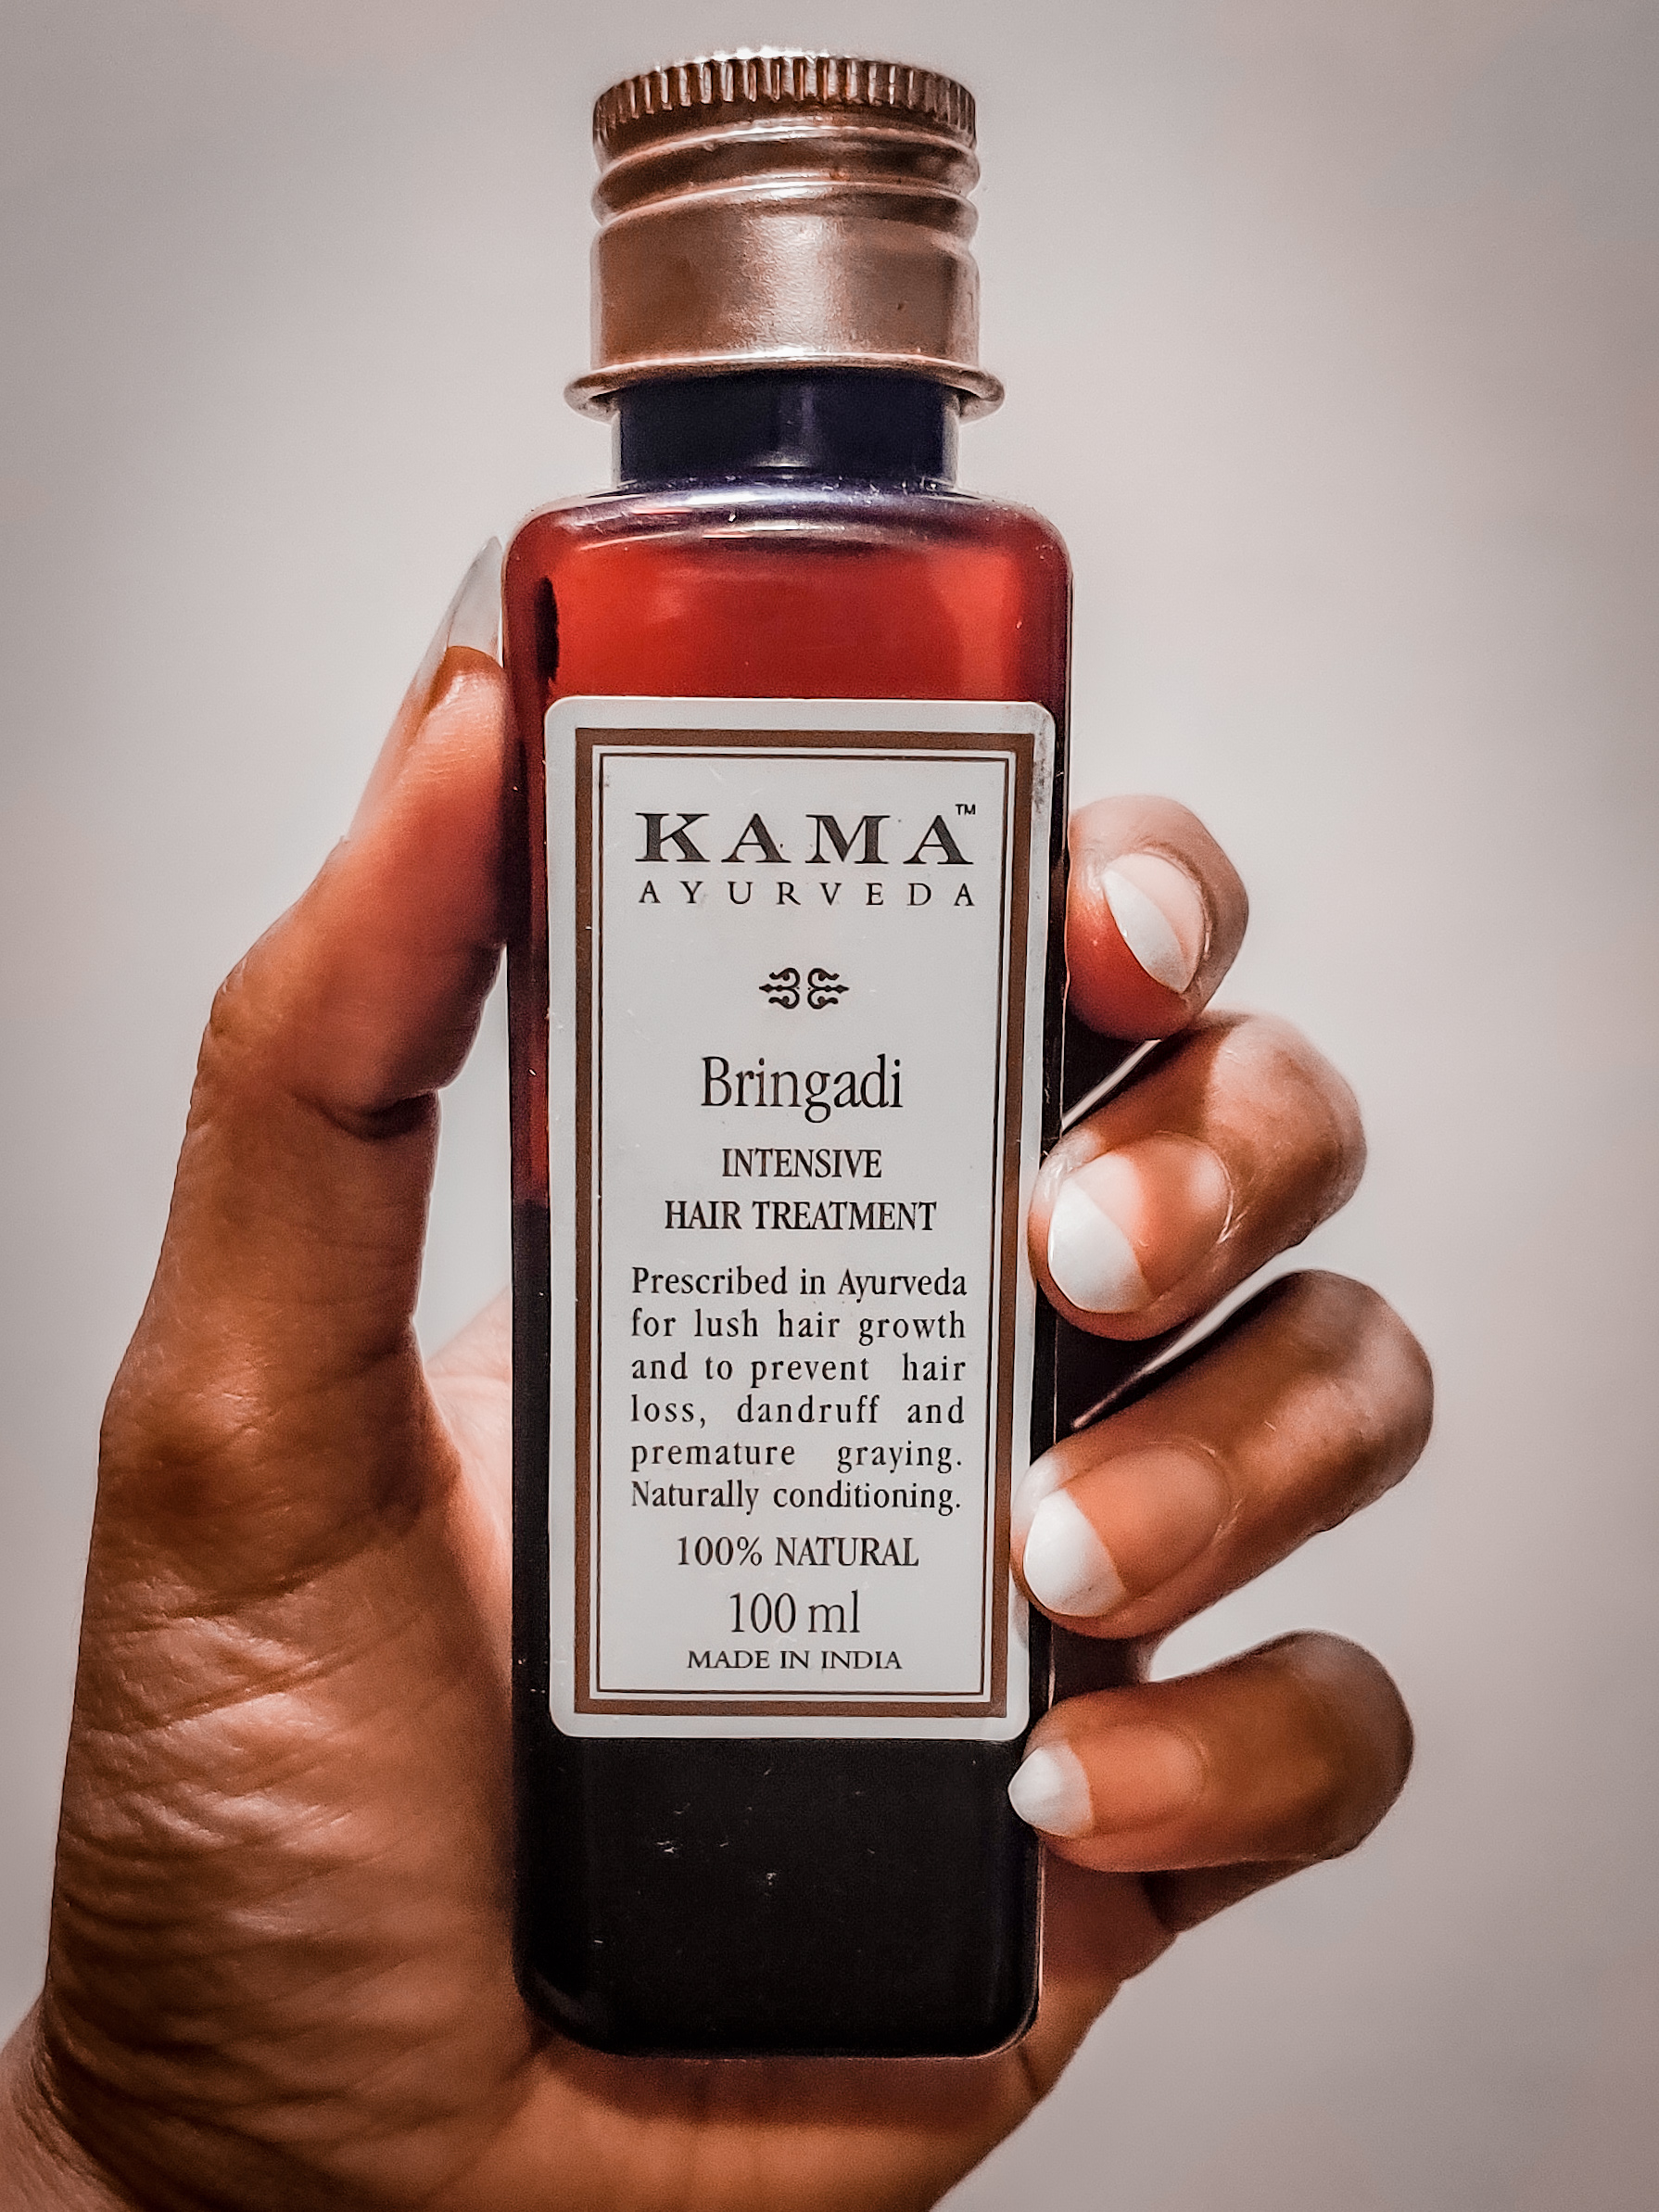 Kama Ayurveda Bringadi Intensive Hair Treatment Oil Reviews Ingredients Benefits How To Use